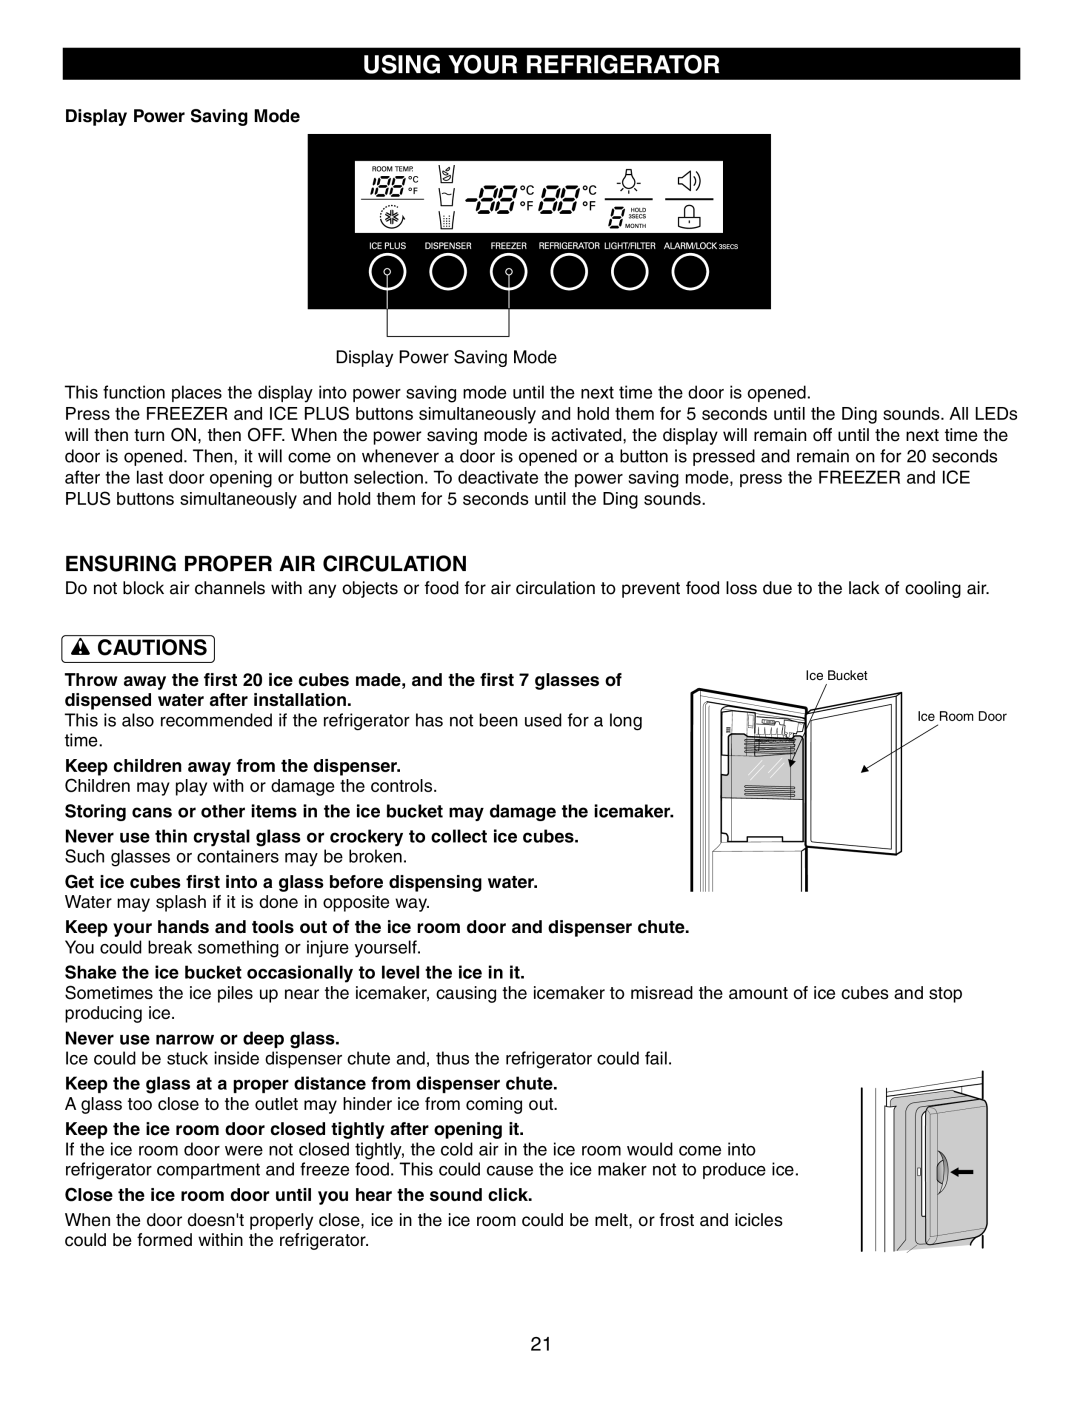 LG Electronics LFX25950 manual Using Your Refrigerator, Ensuring Proper Air Circulation, w CAUTIONS 